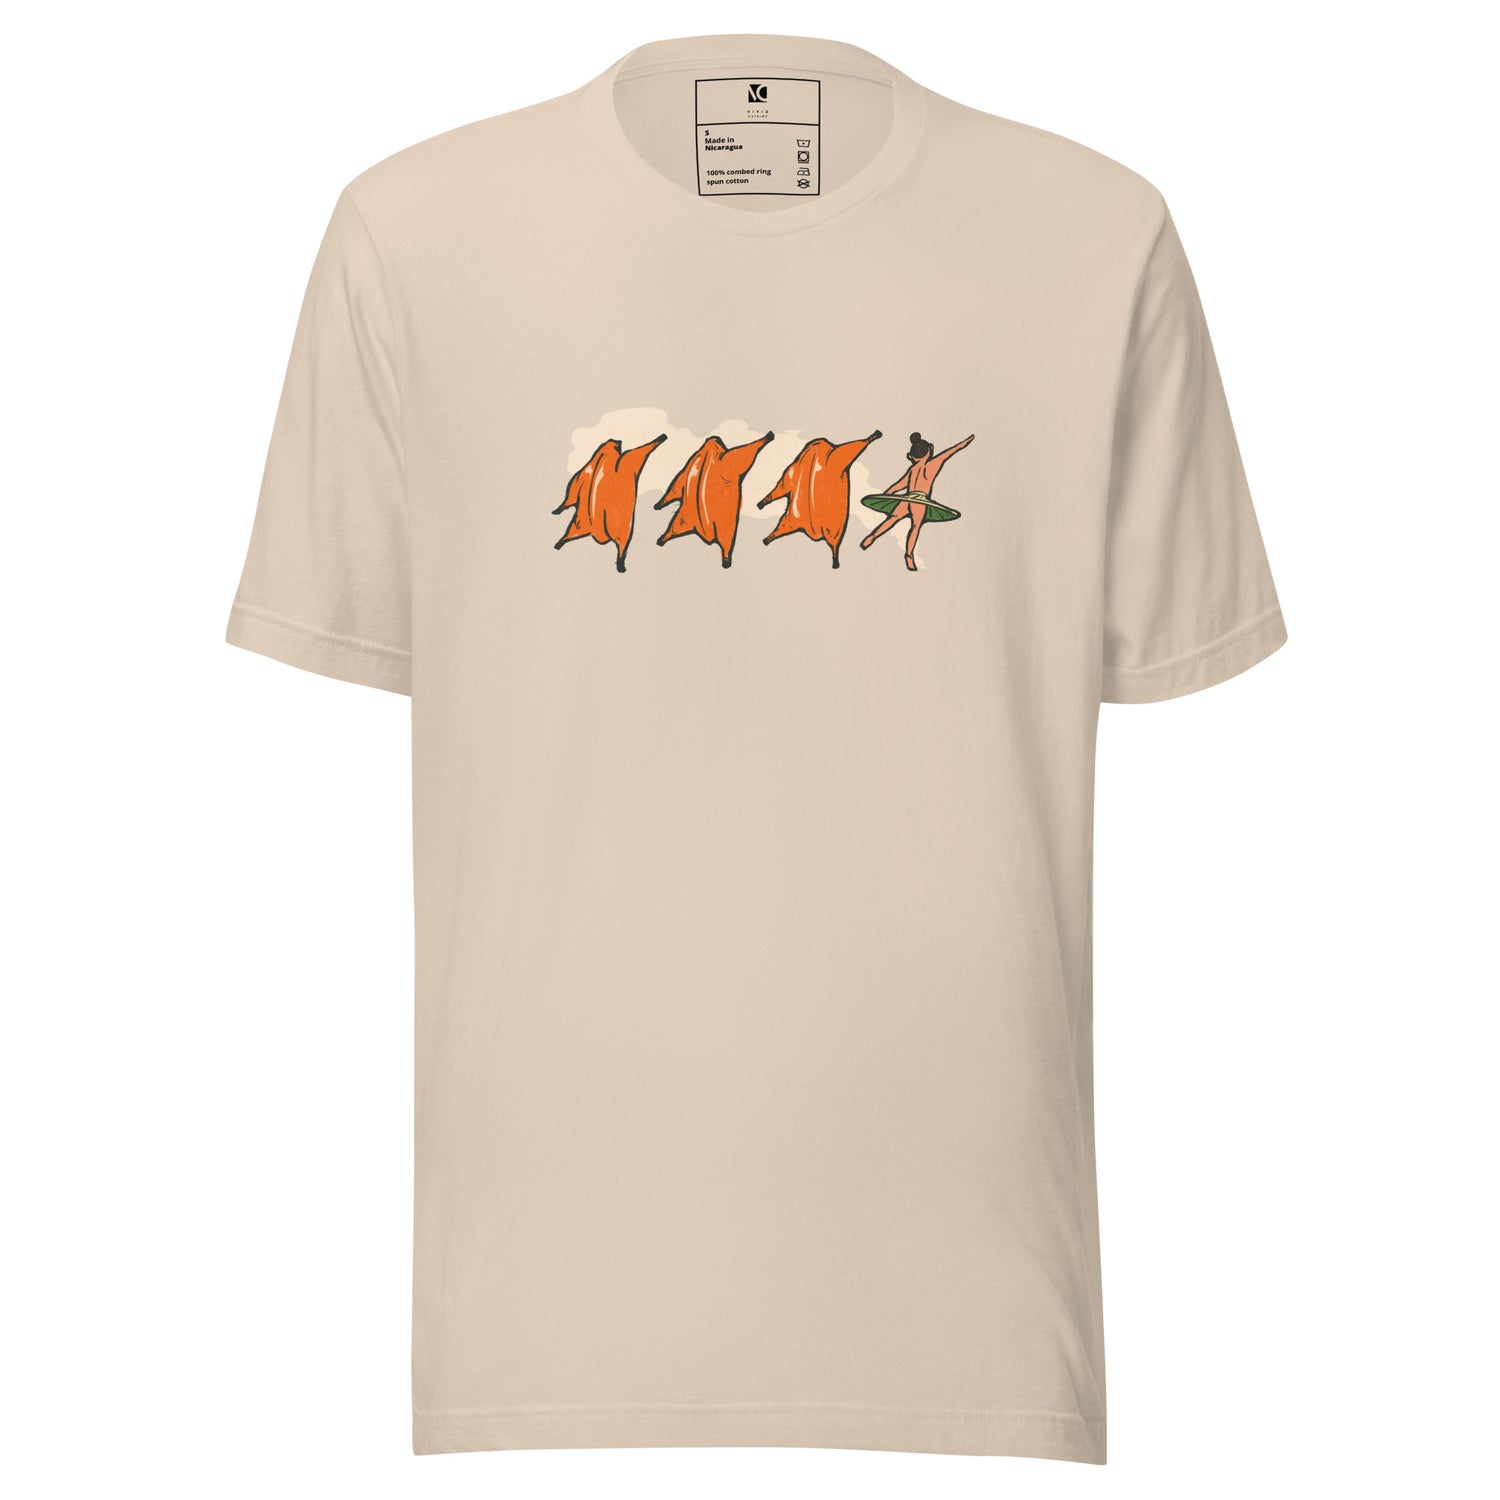 Dance of the Roasted Ducks - Unisex T-Shirt